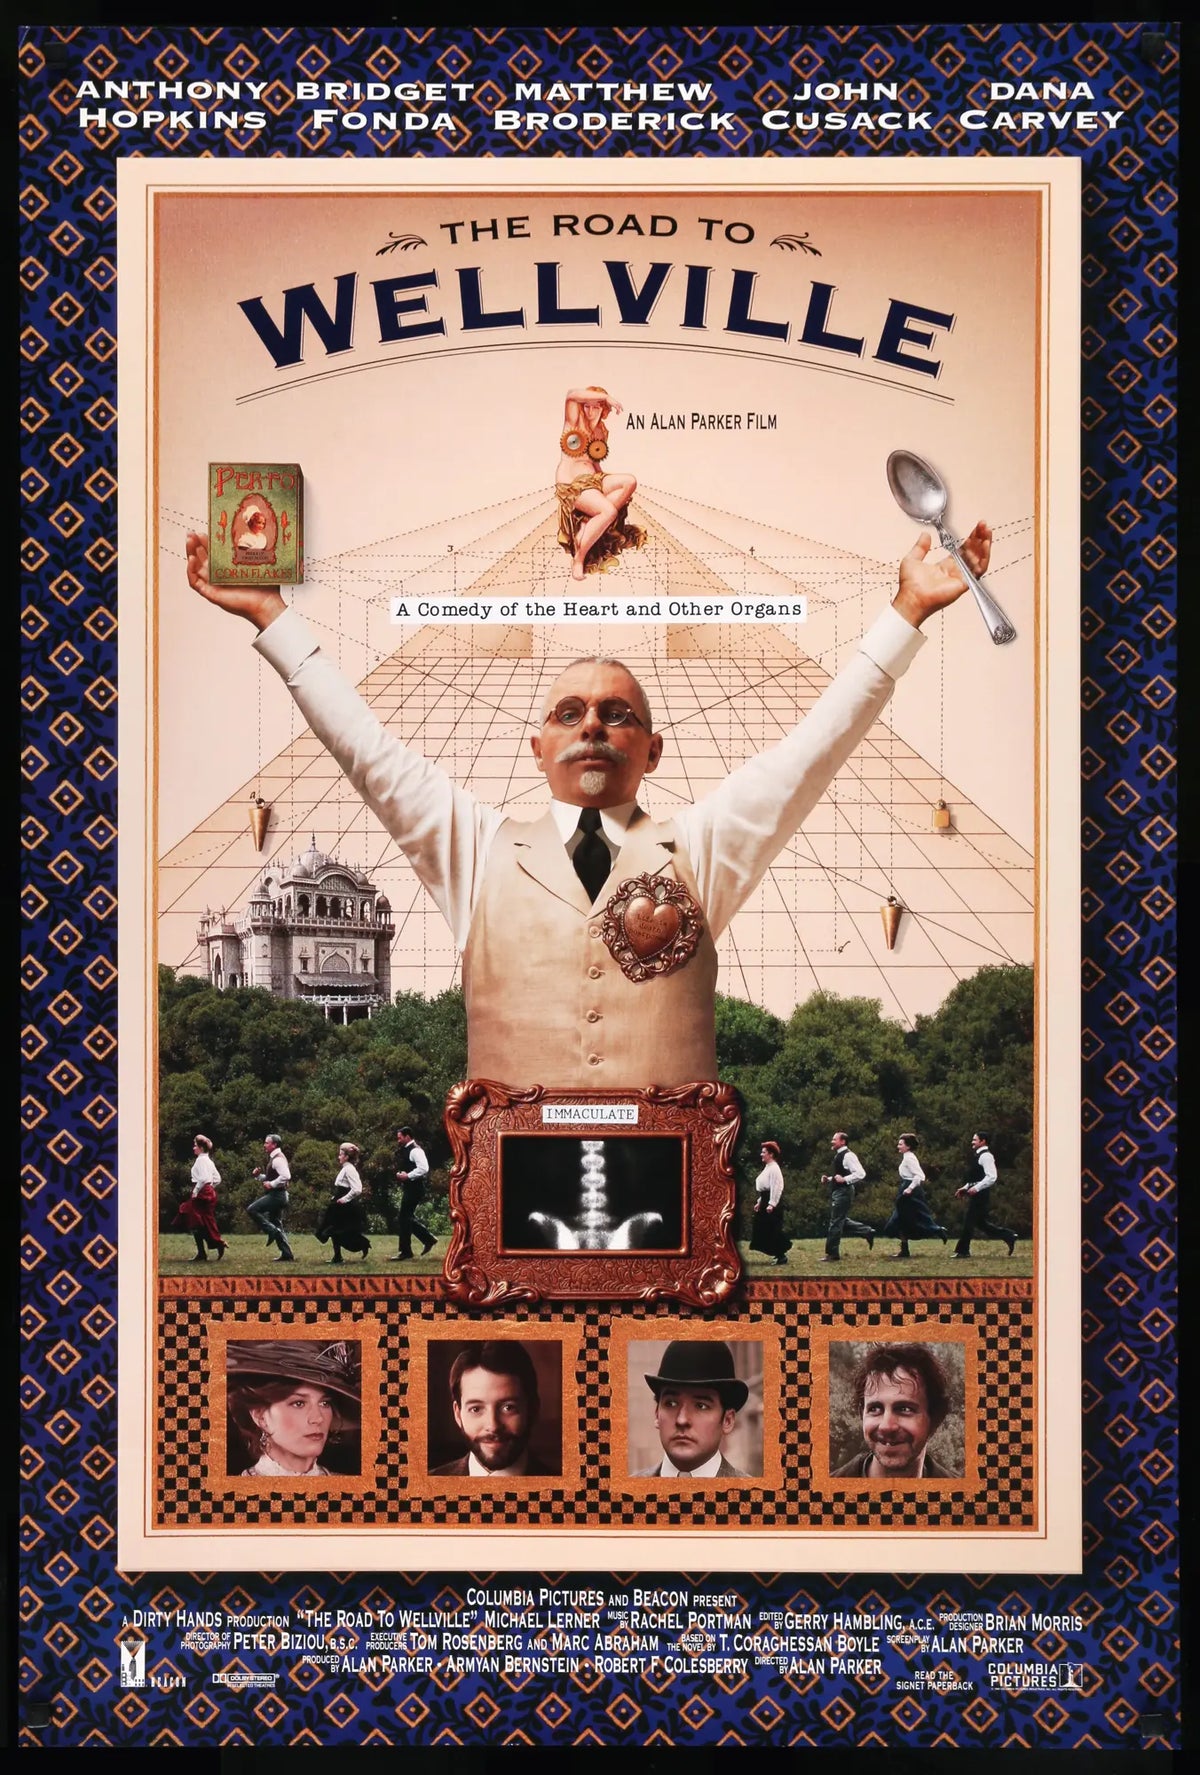 Road to Wellville (1994) original movie poster for sale at Original Film Art